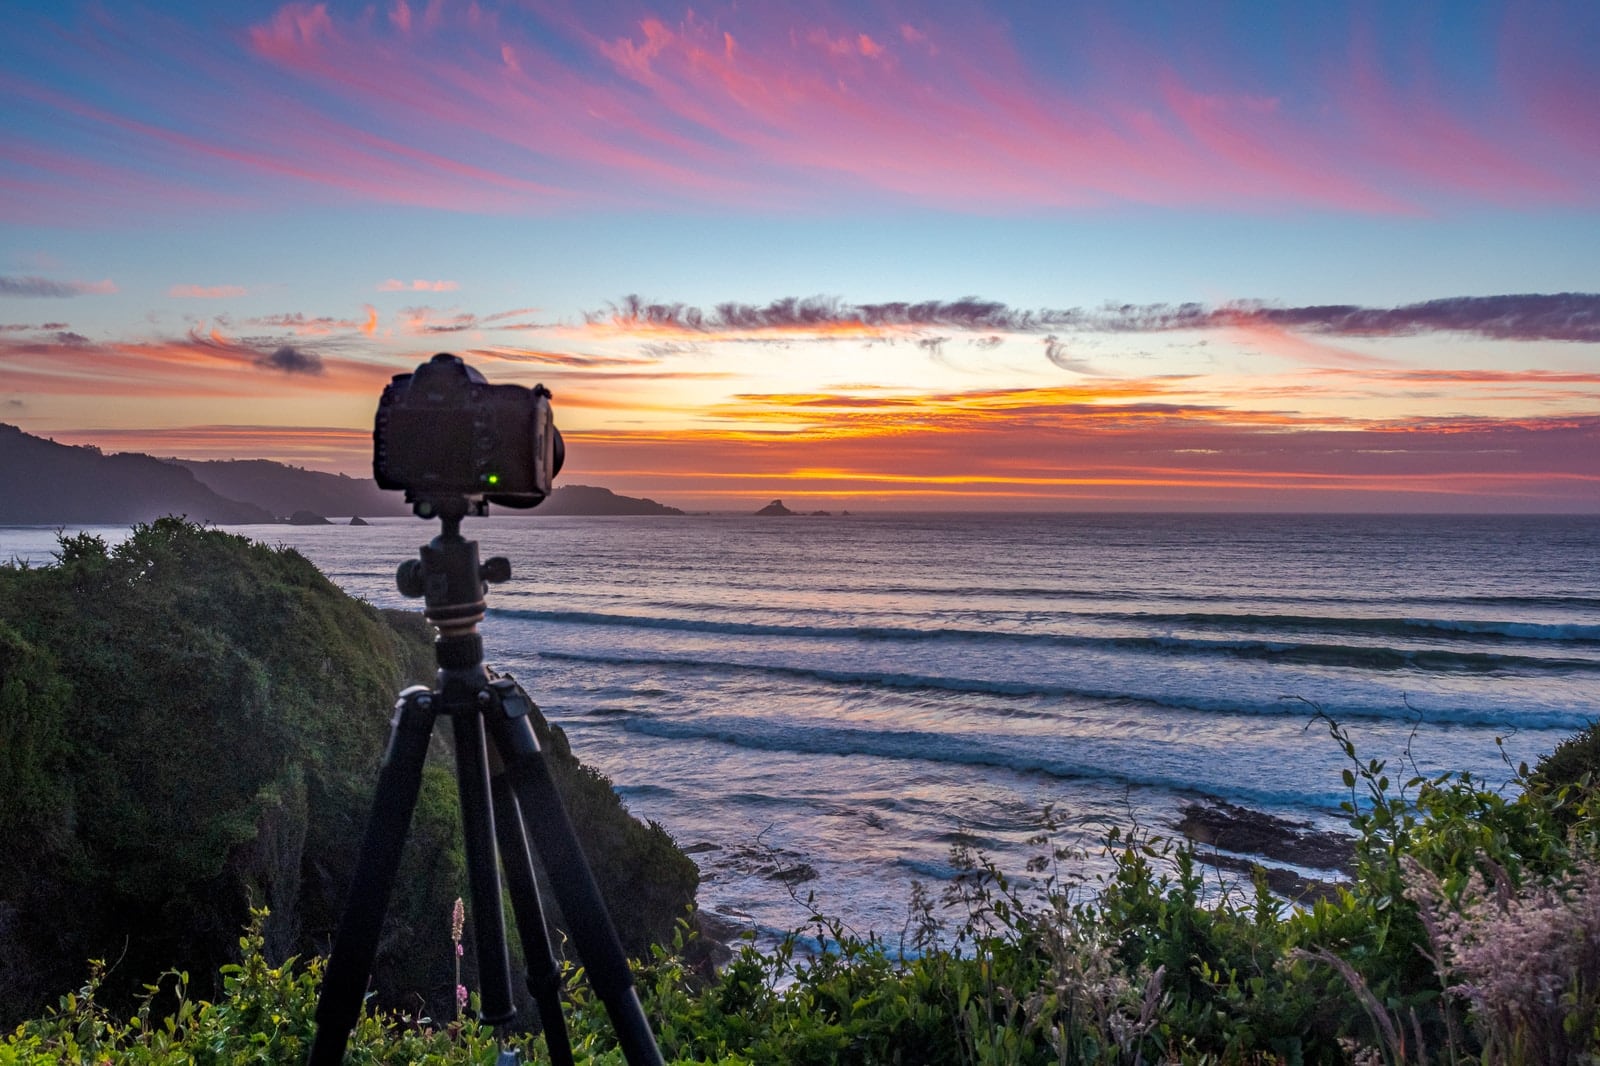 kamera på stativ tager timelapse ved kysten under solnedgang - Short Term Timelapse - den lette timelapse teknik